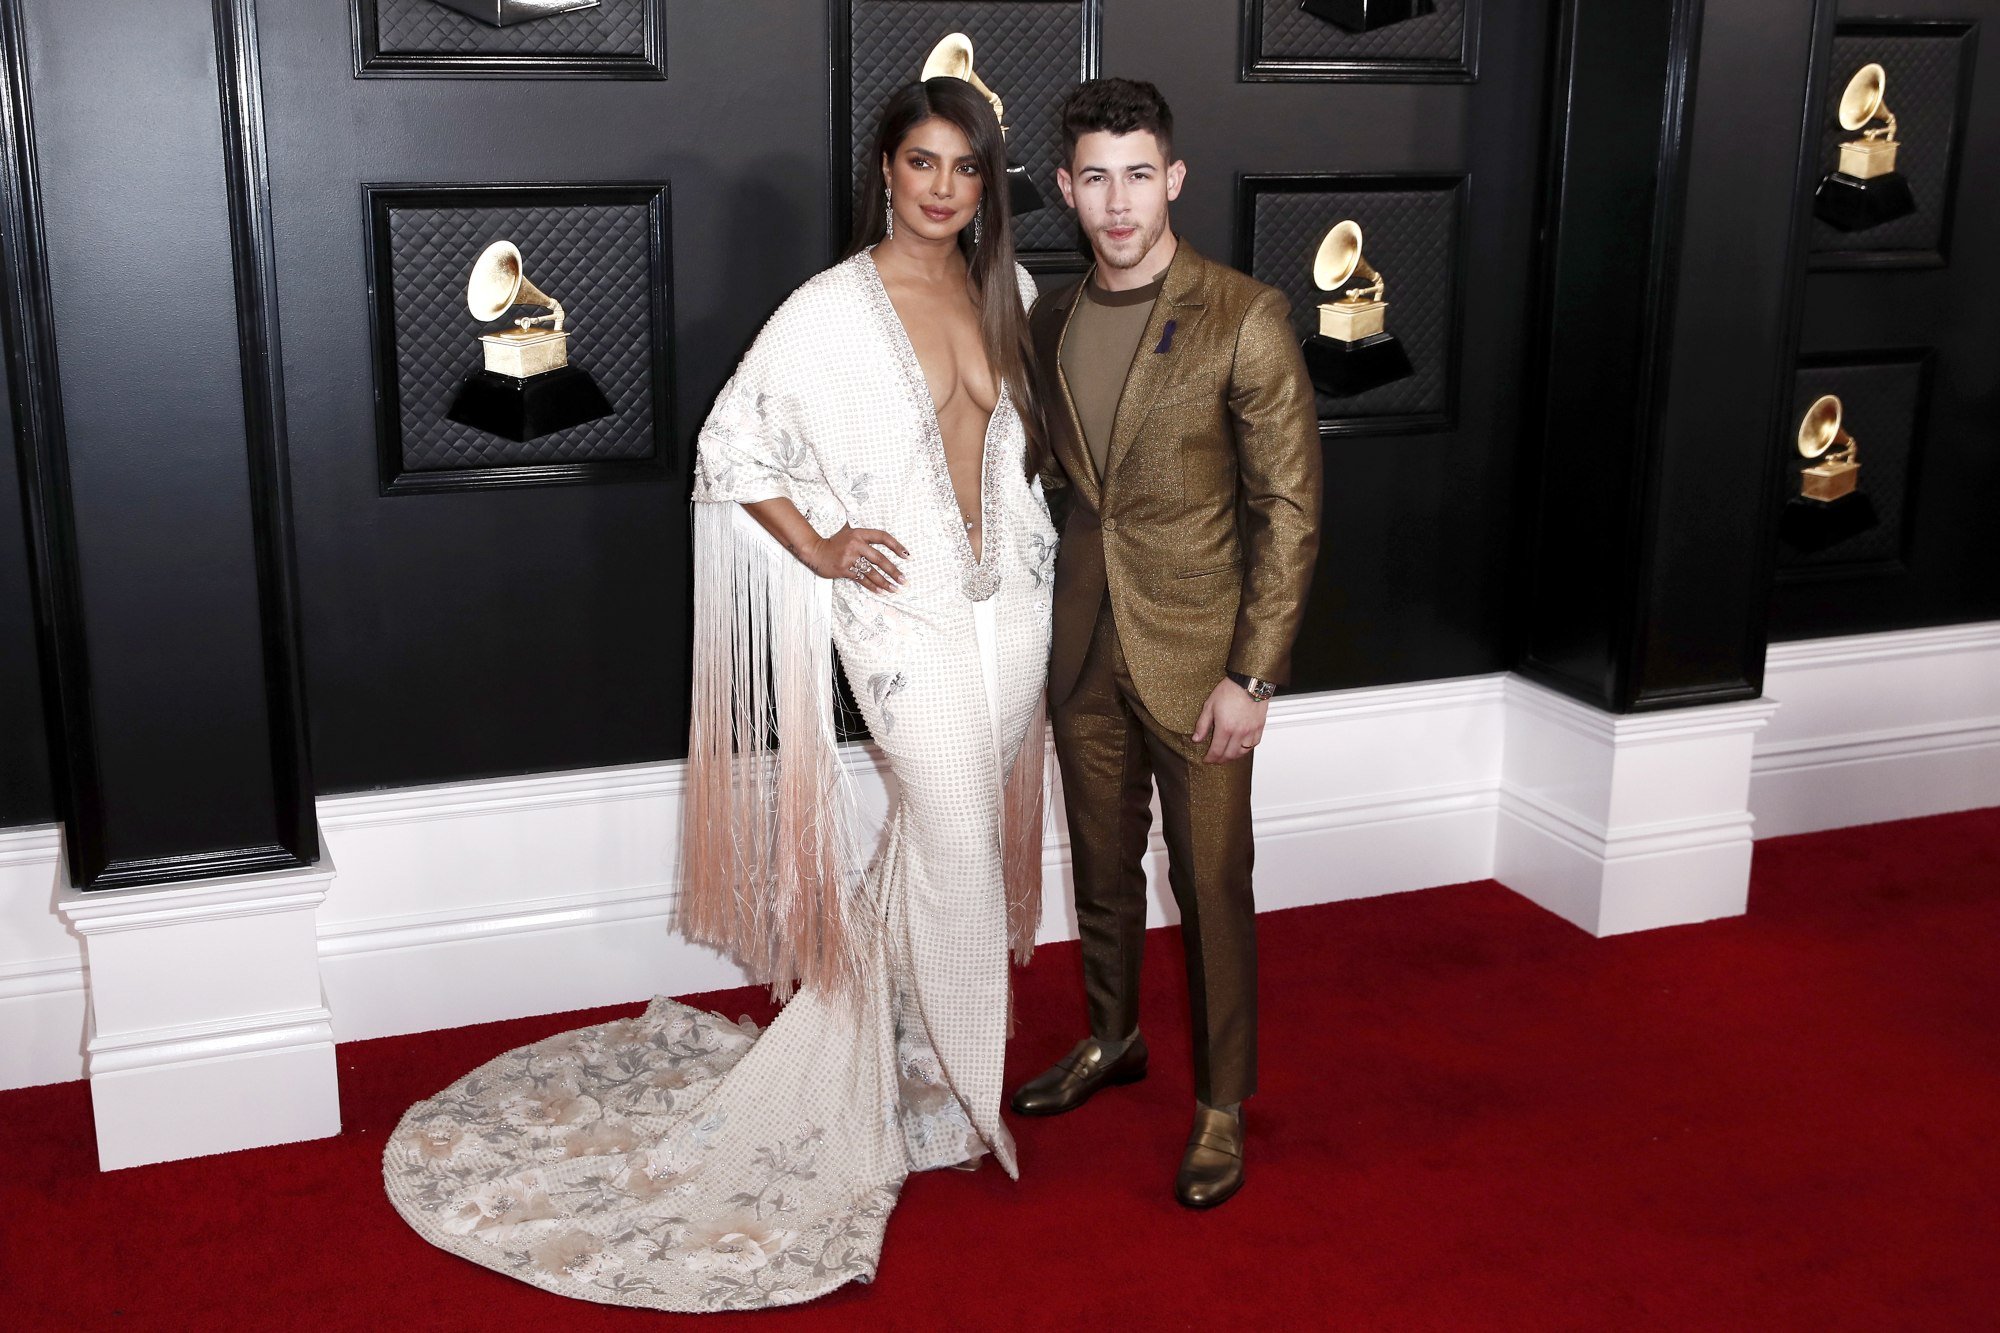 Nick Jonas and Priyanka Chopra Jonas arrive for the 62nd annual Grammy Awards ceremony in January 2020 in Los Angeles, California. Photo: EPA-EFE